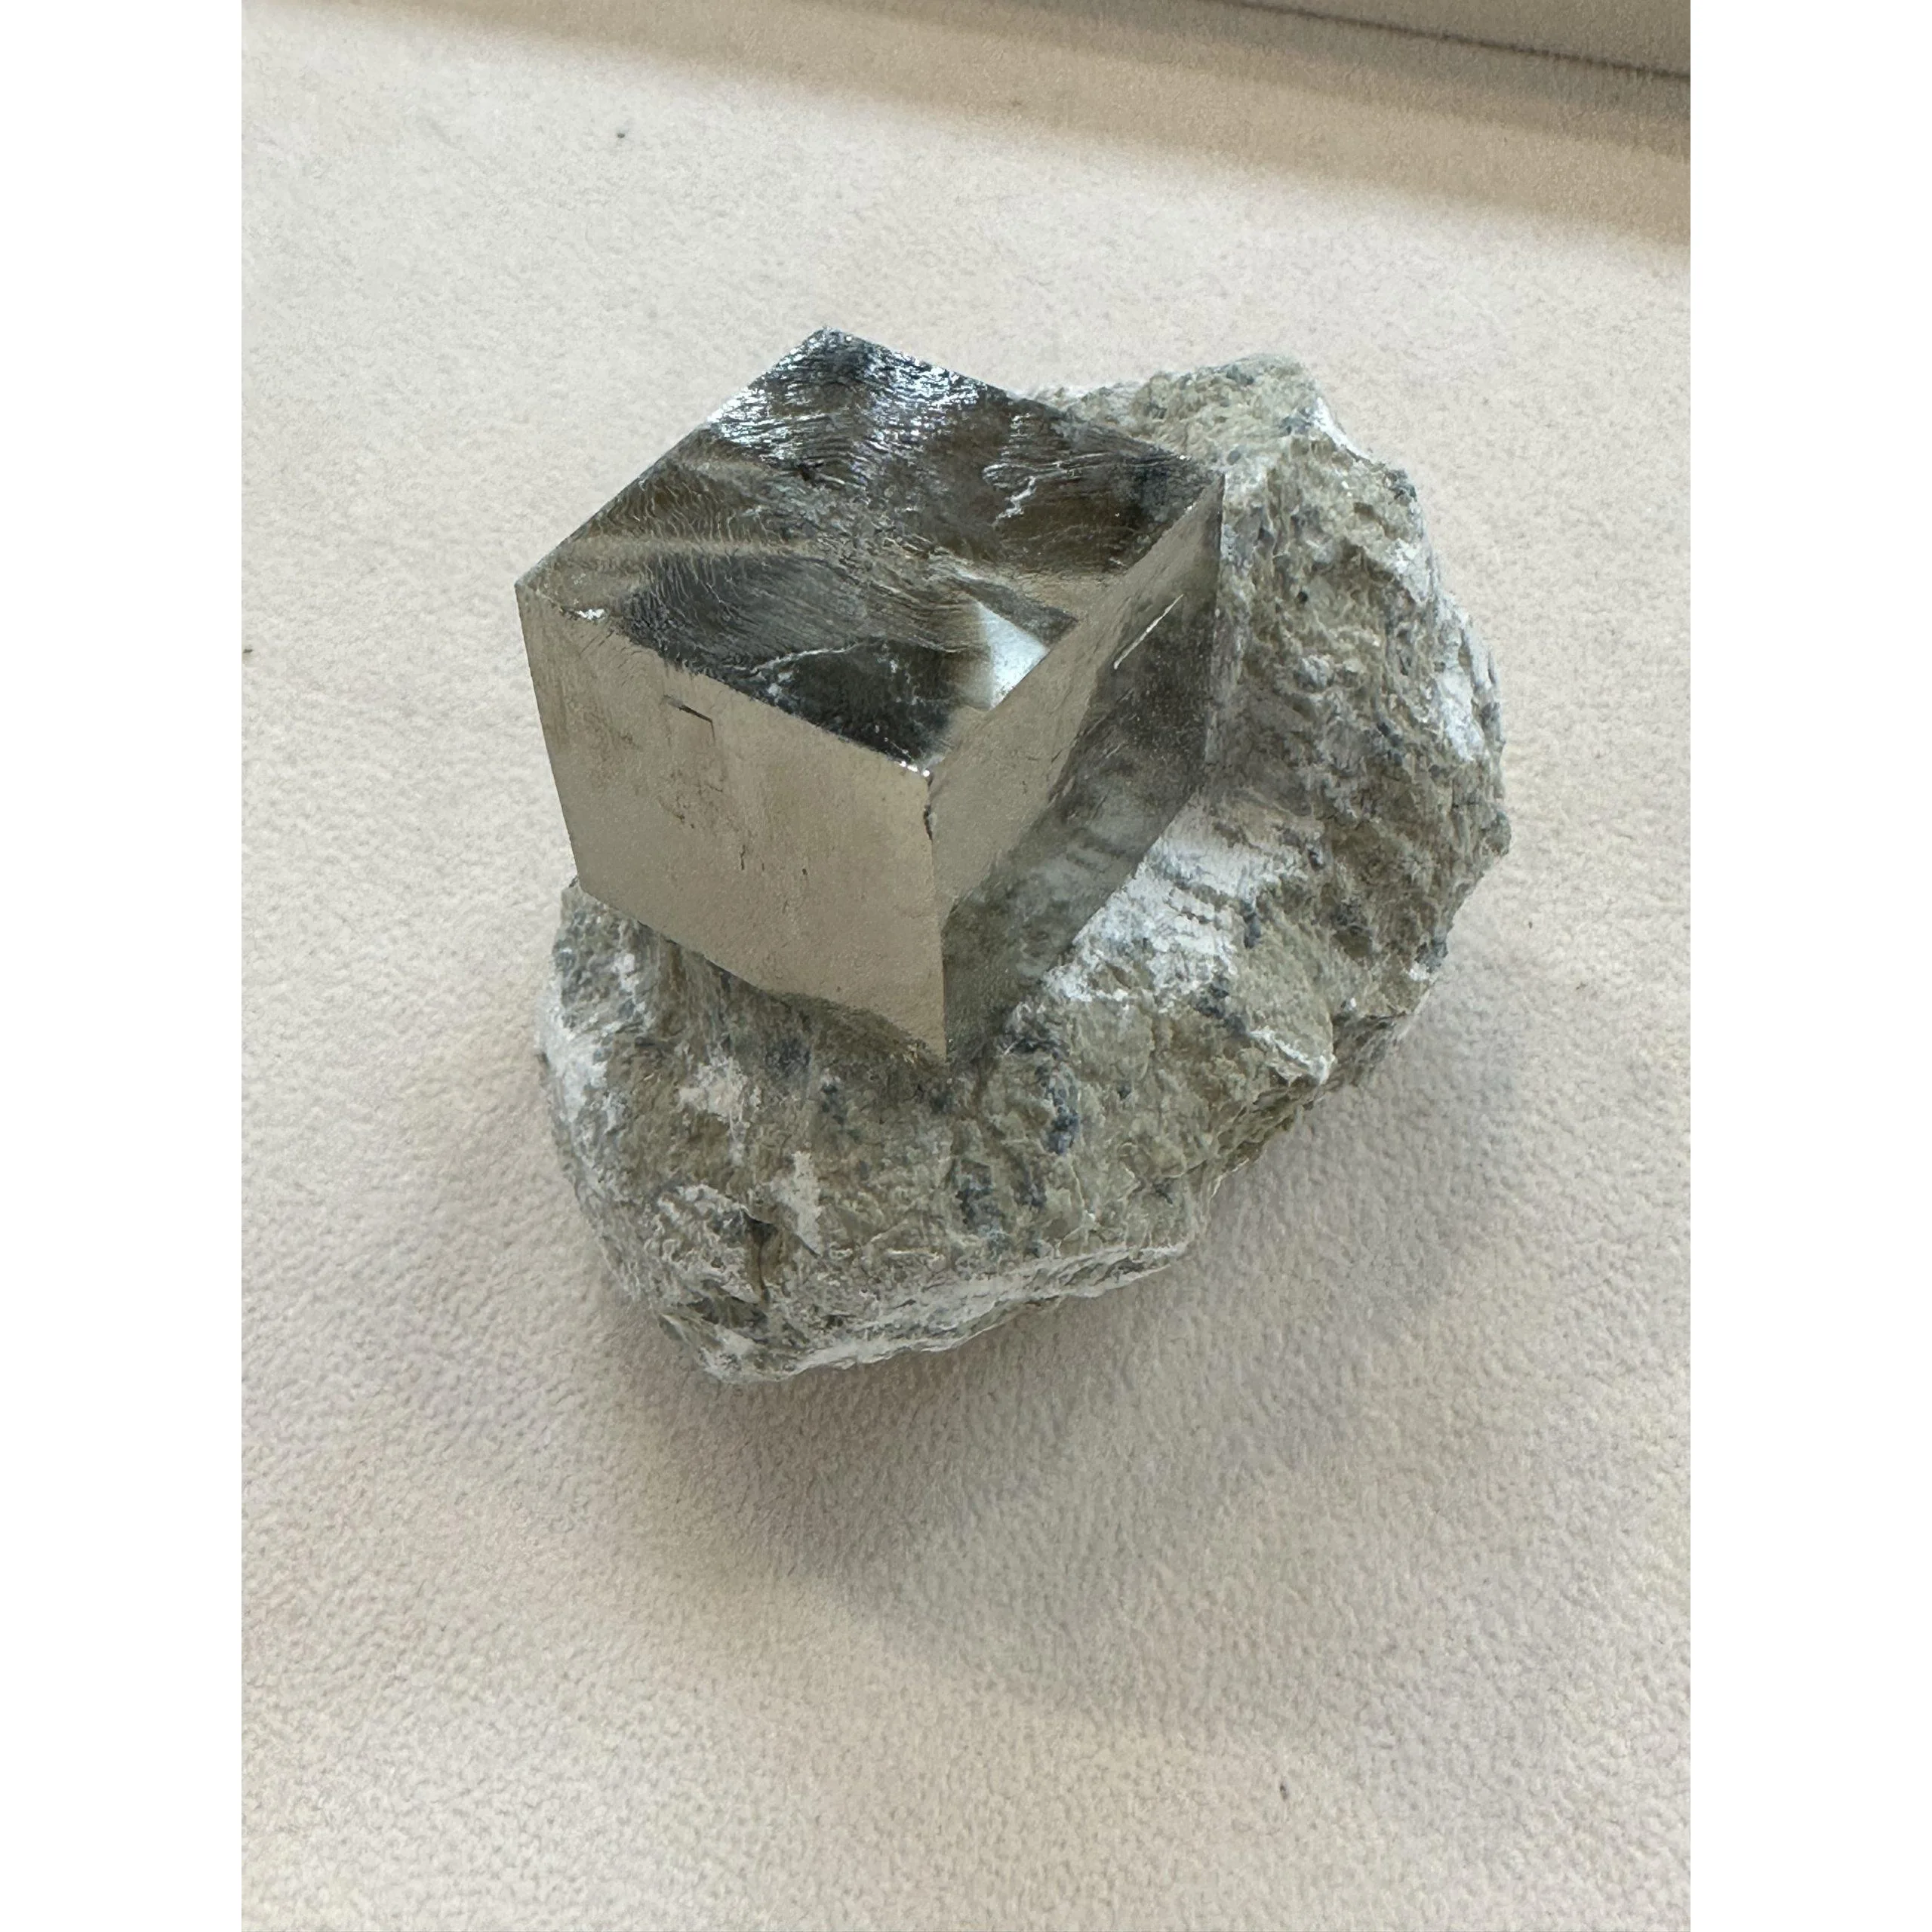 Pyrite Cube, Spanish fools gold Prehistoric Online